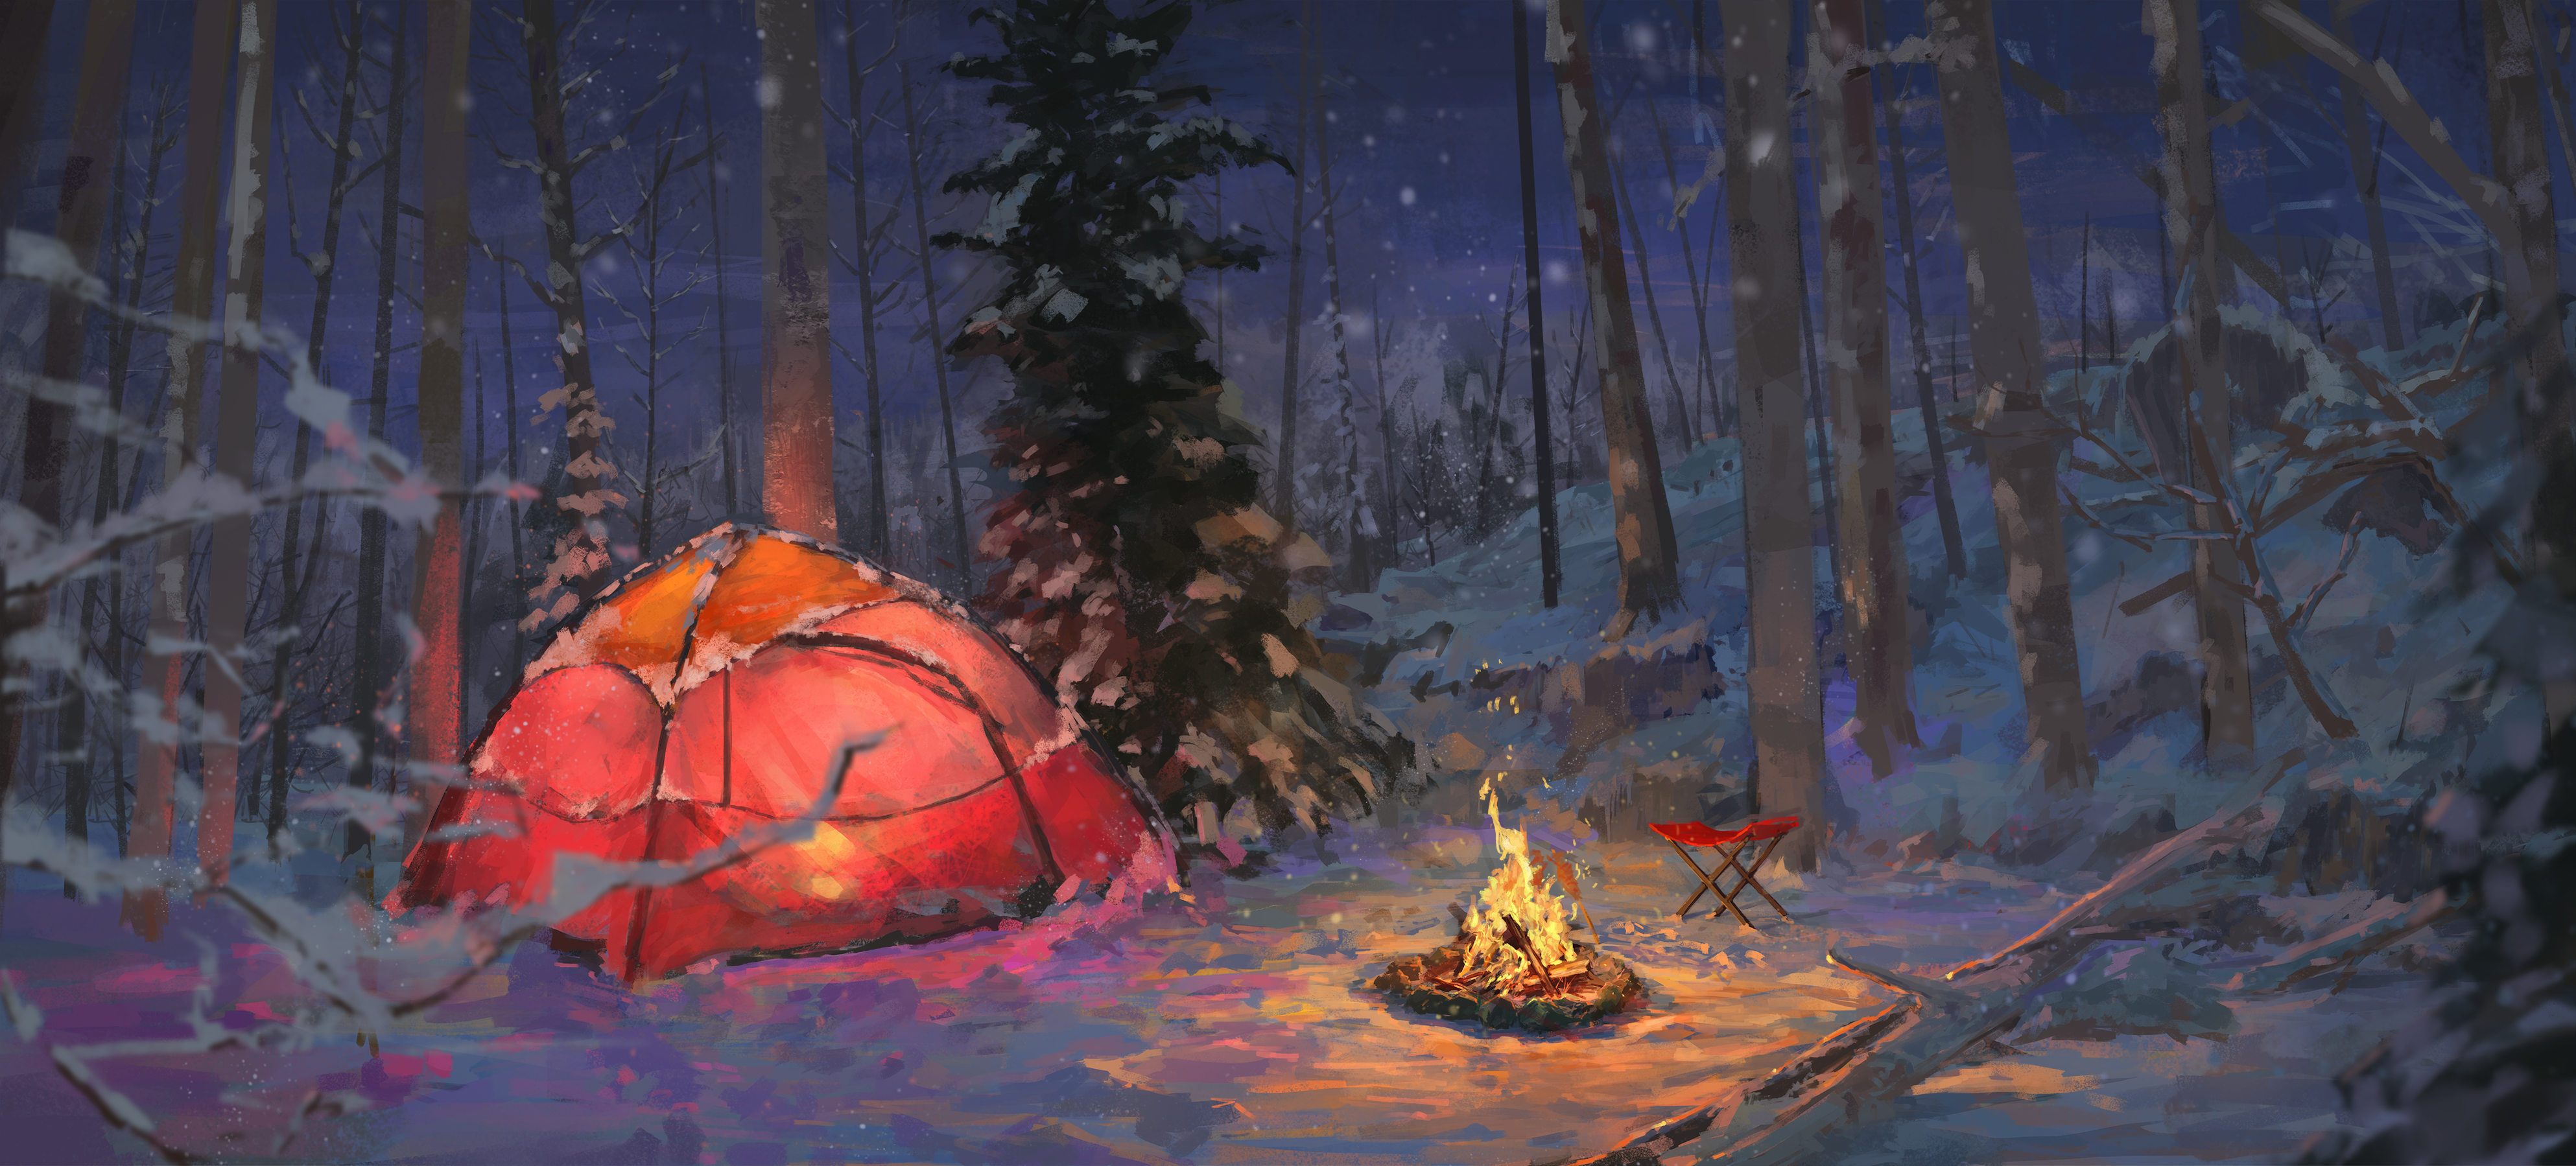 Anime Forest Night Winter Snow Tent Bonfires XilmO 3973x1799